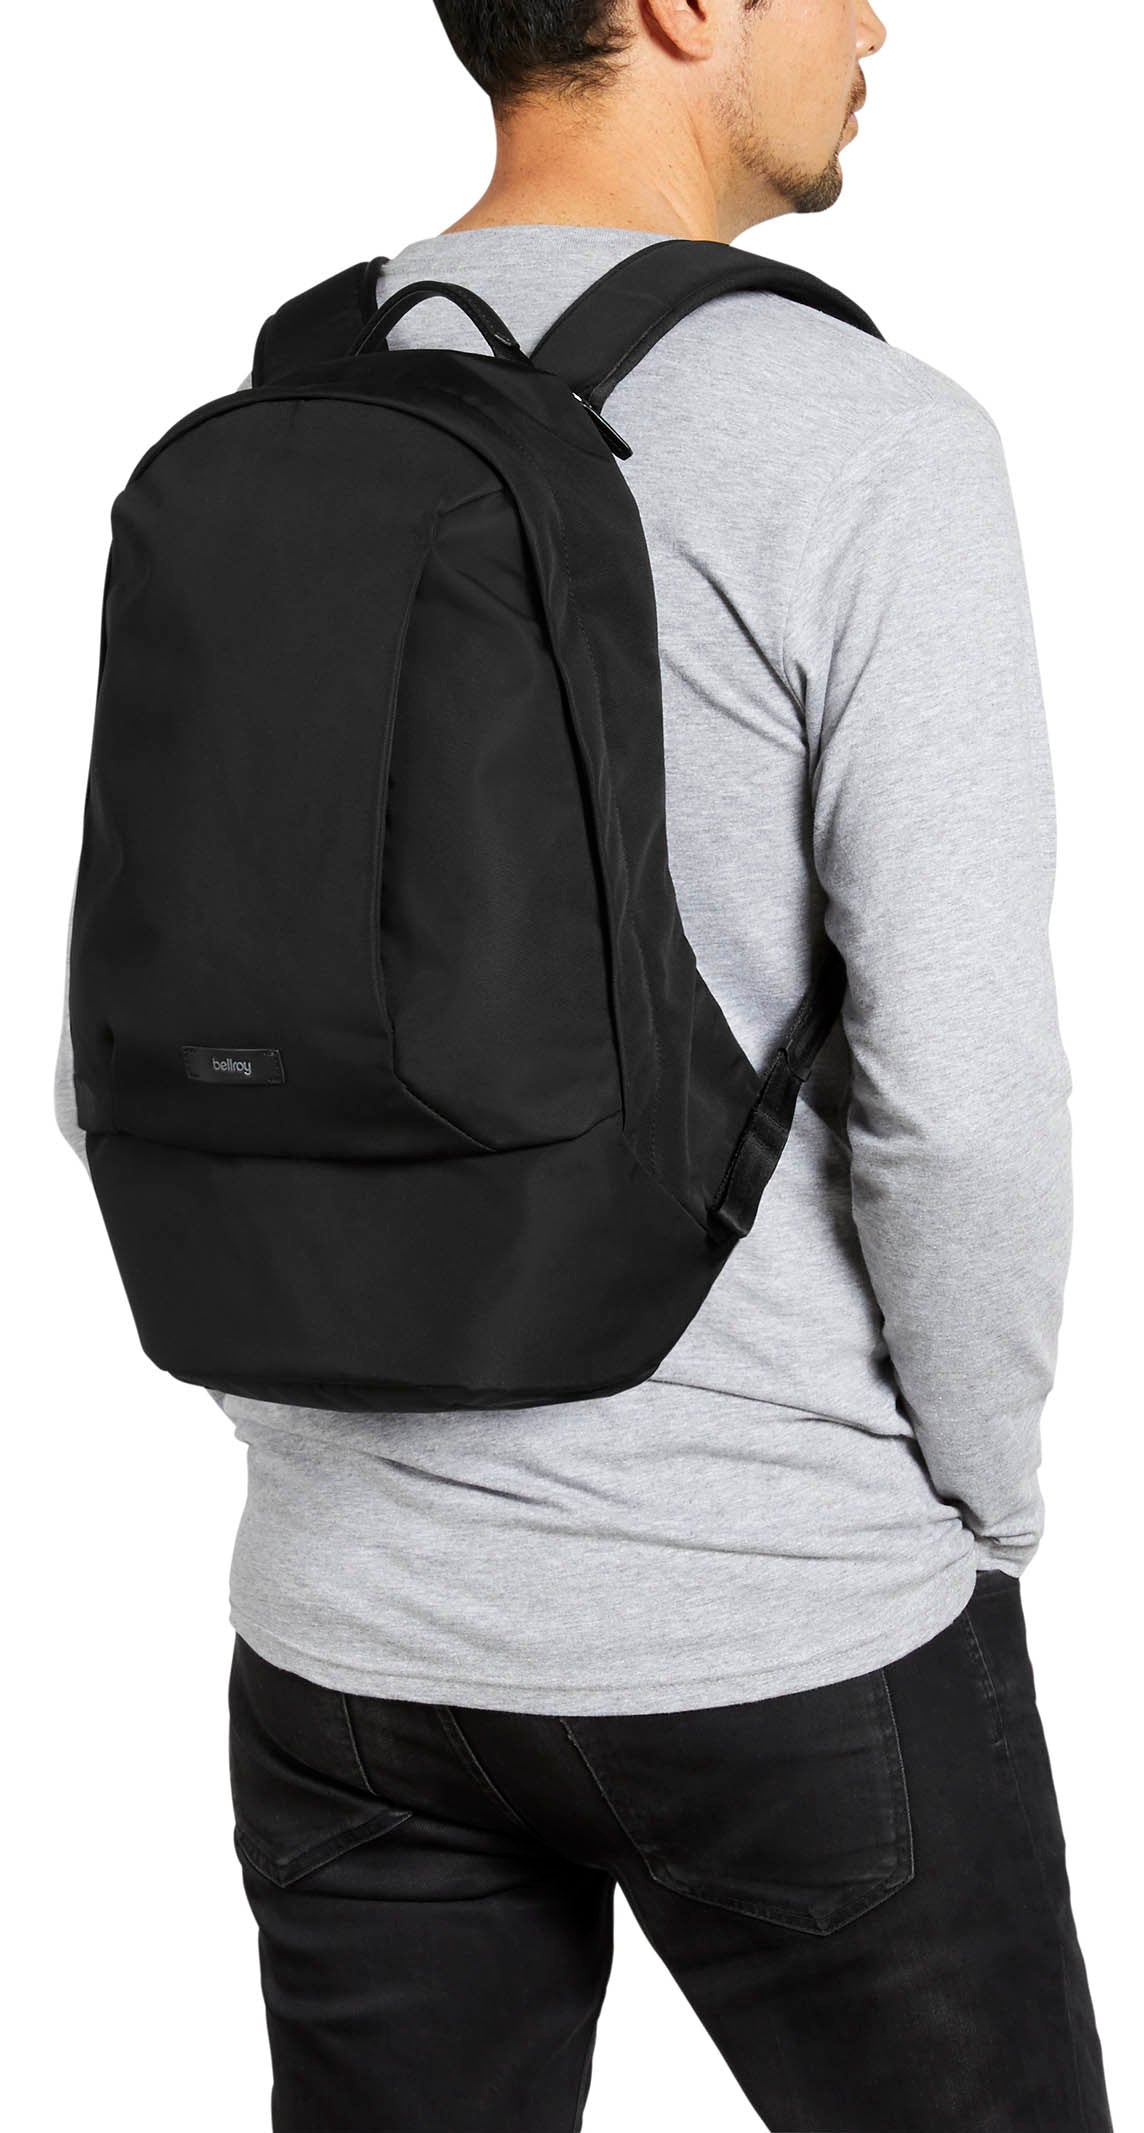 Bellroy Classic Backpack - Black